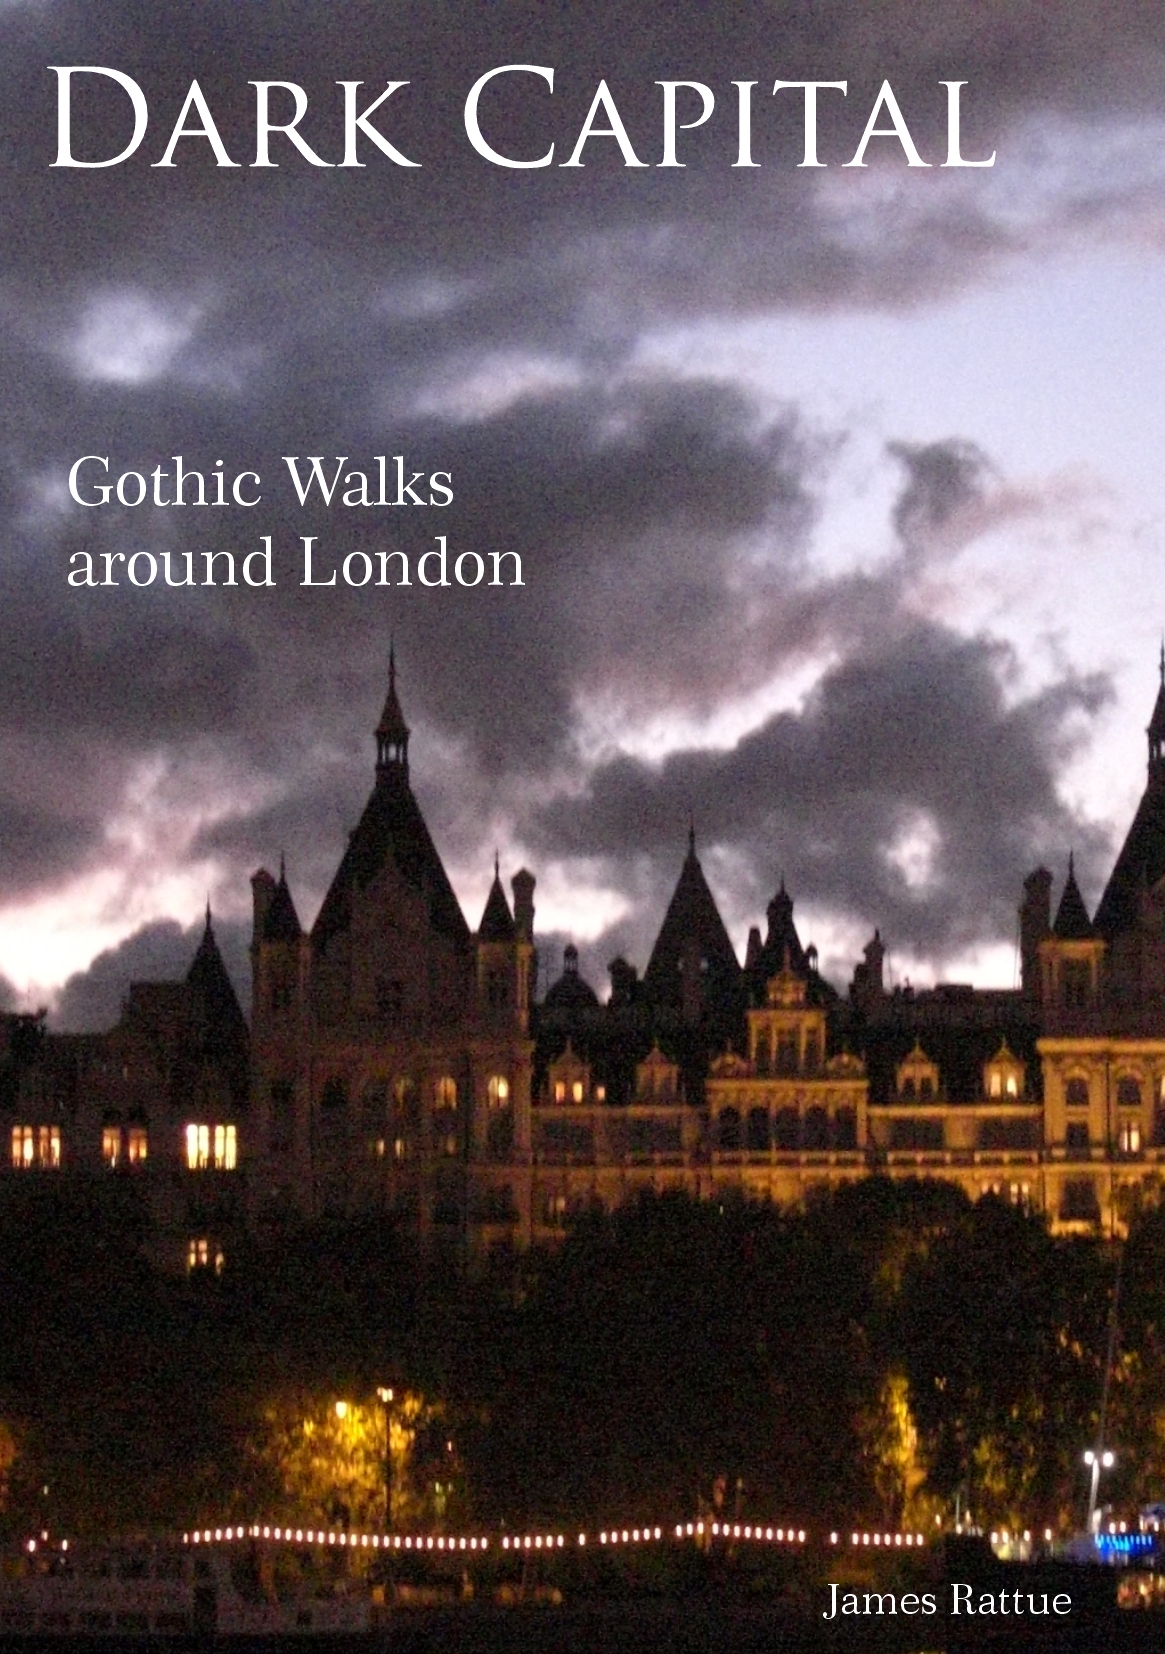 Dark Capital, Gothic Walks around London